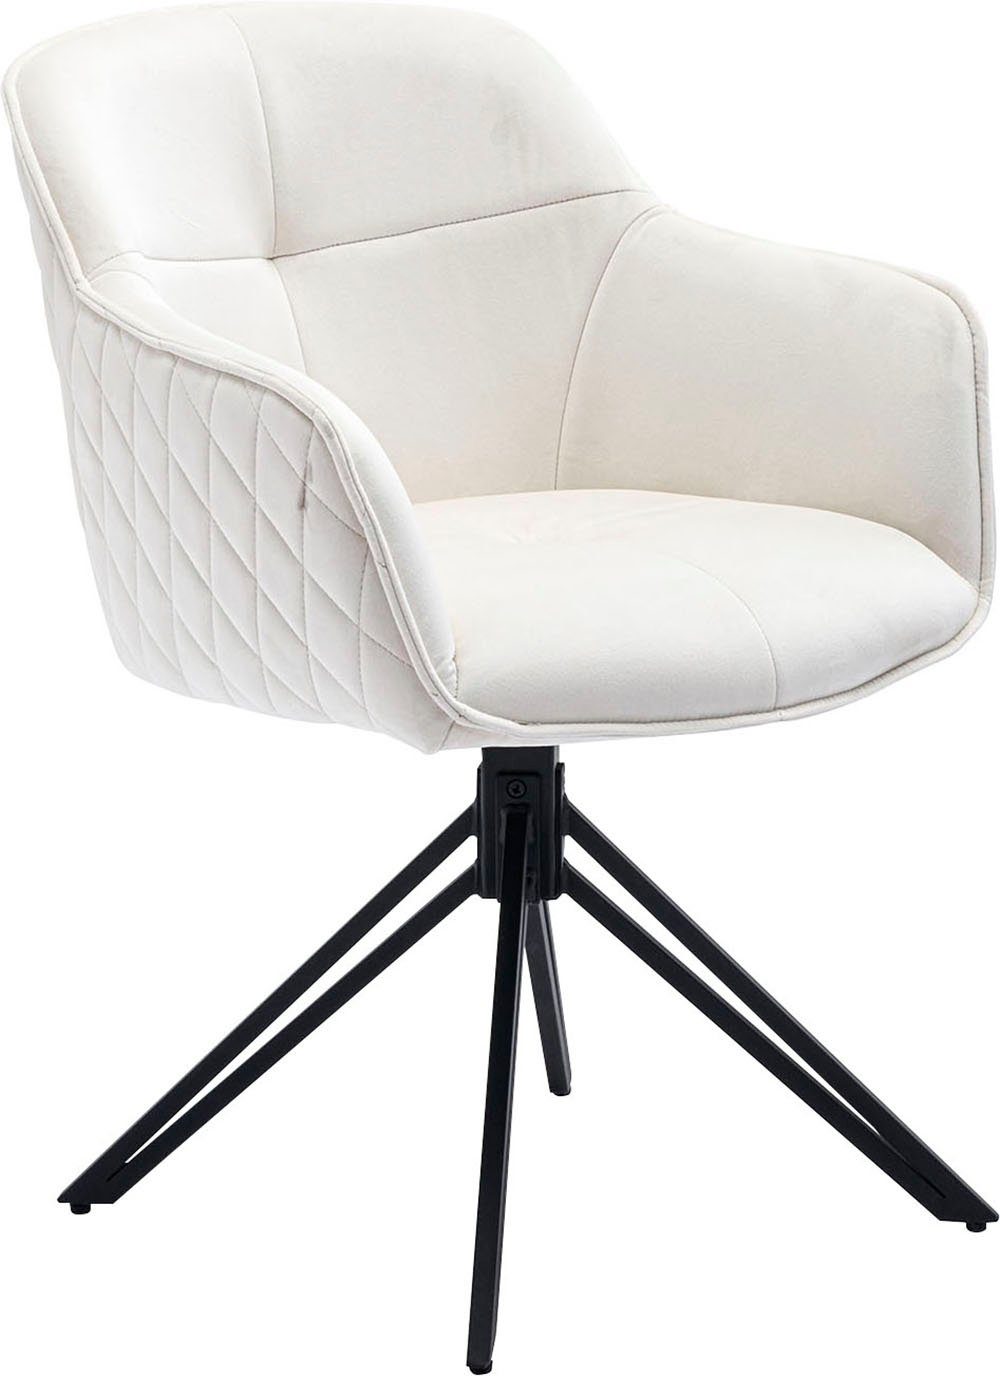 SalesFever Armlehnstuhl, mit 360° Drehfunktion, Eleganter Stuhl mit  hochwertigem Samtbezug | Funktionssessel